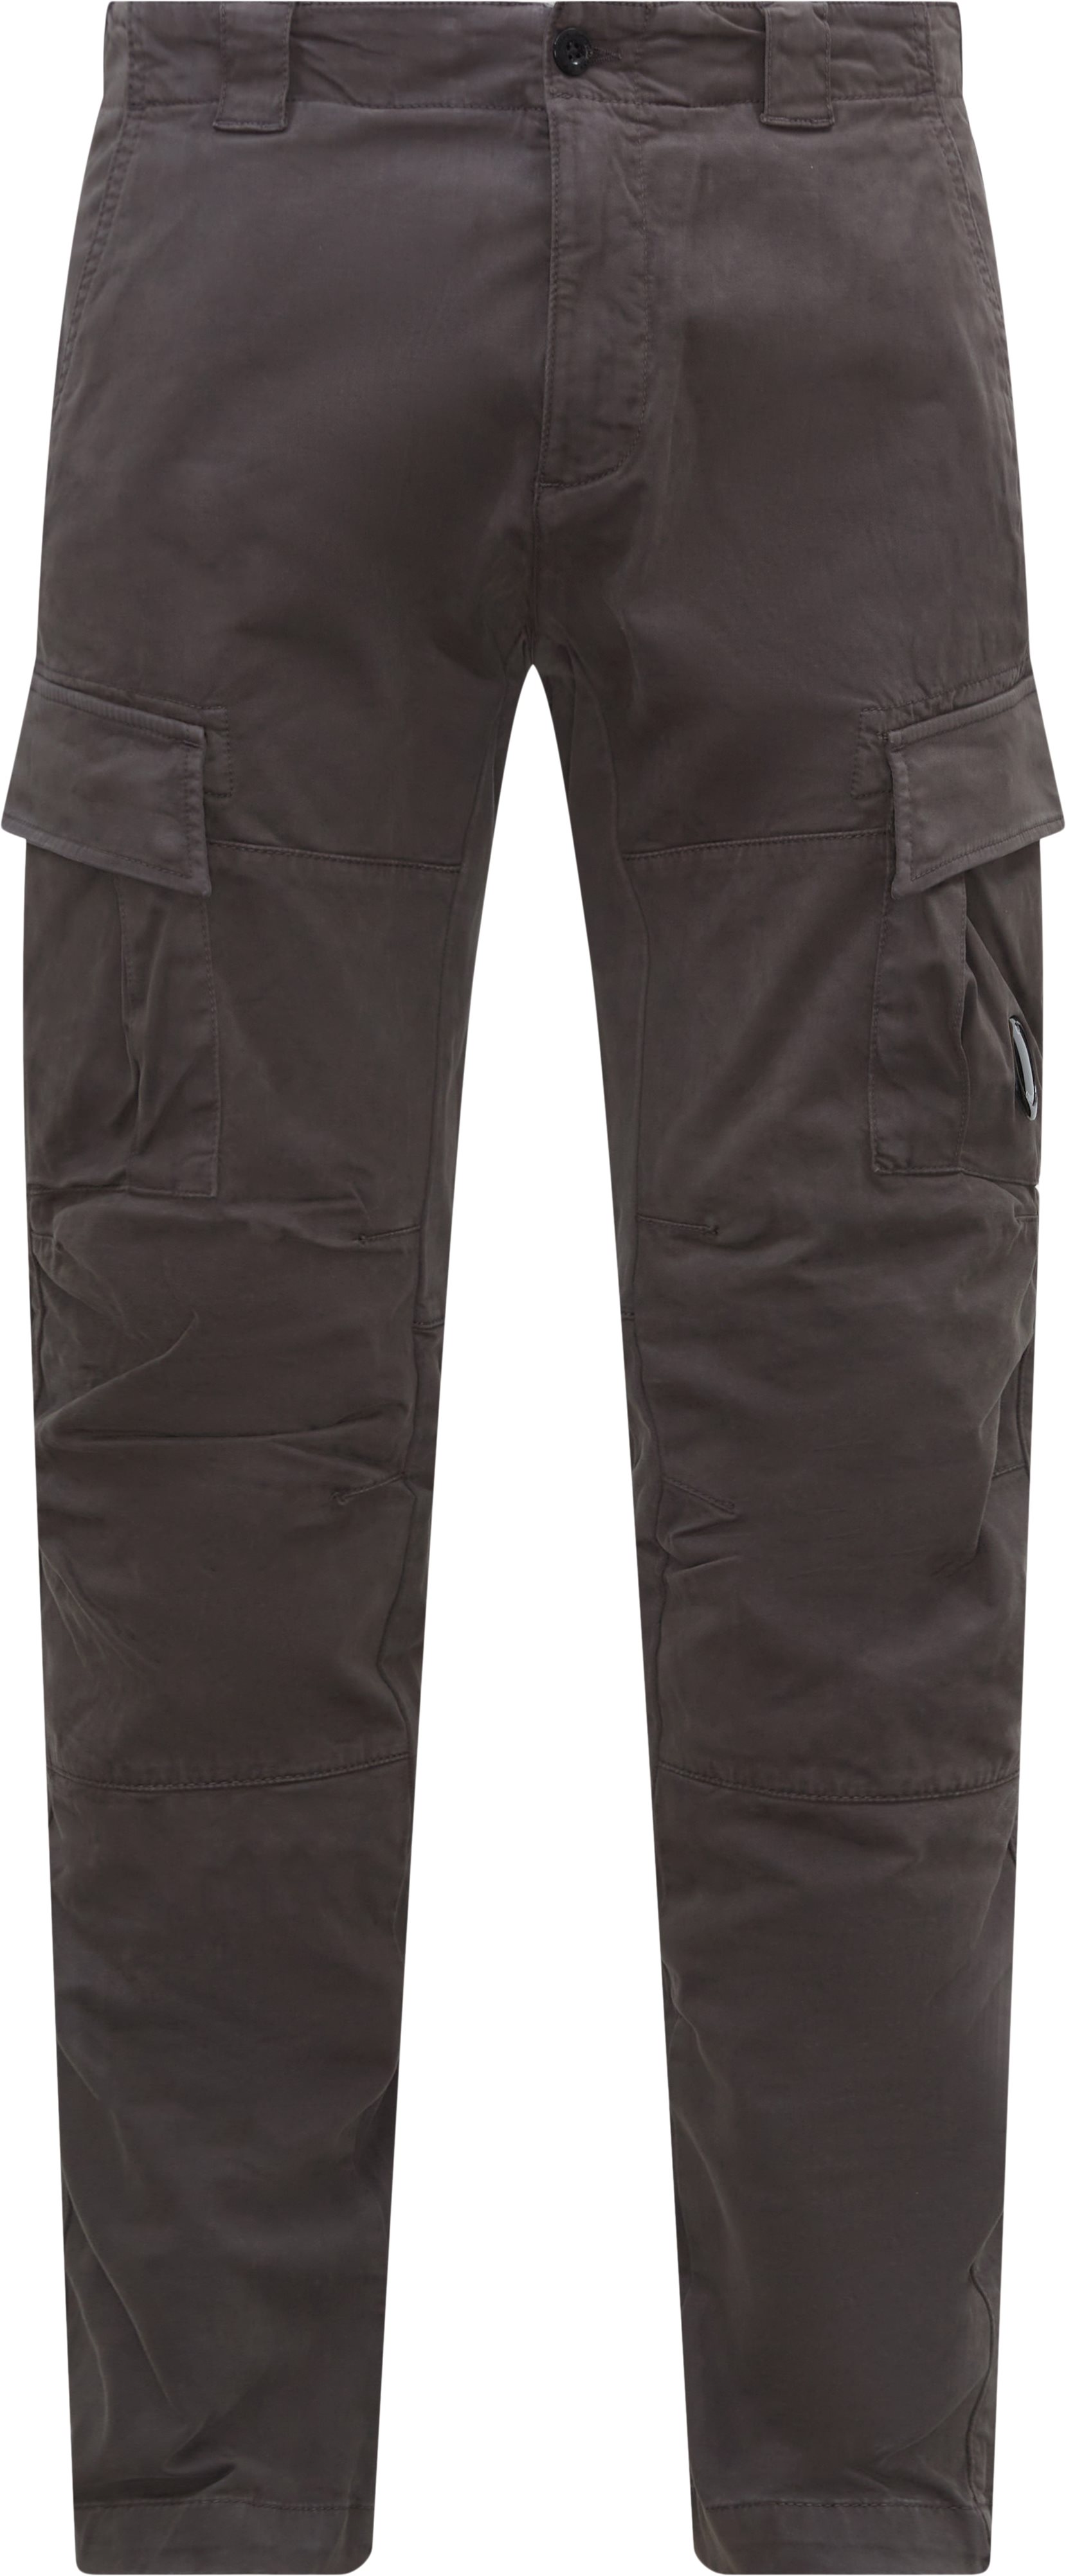 Satin Stretch Cargo Pants - Bukser - Regular fit - Grå